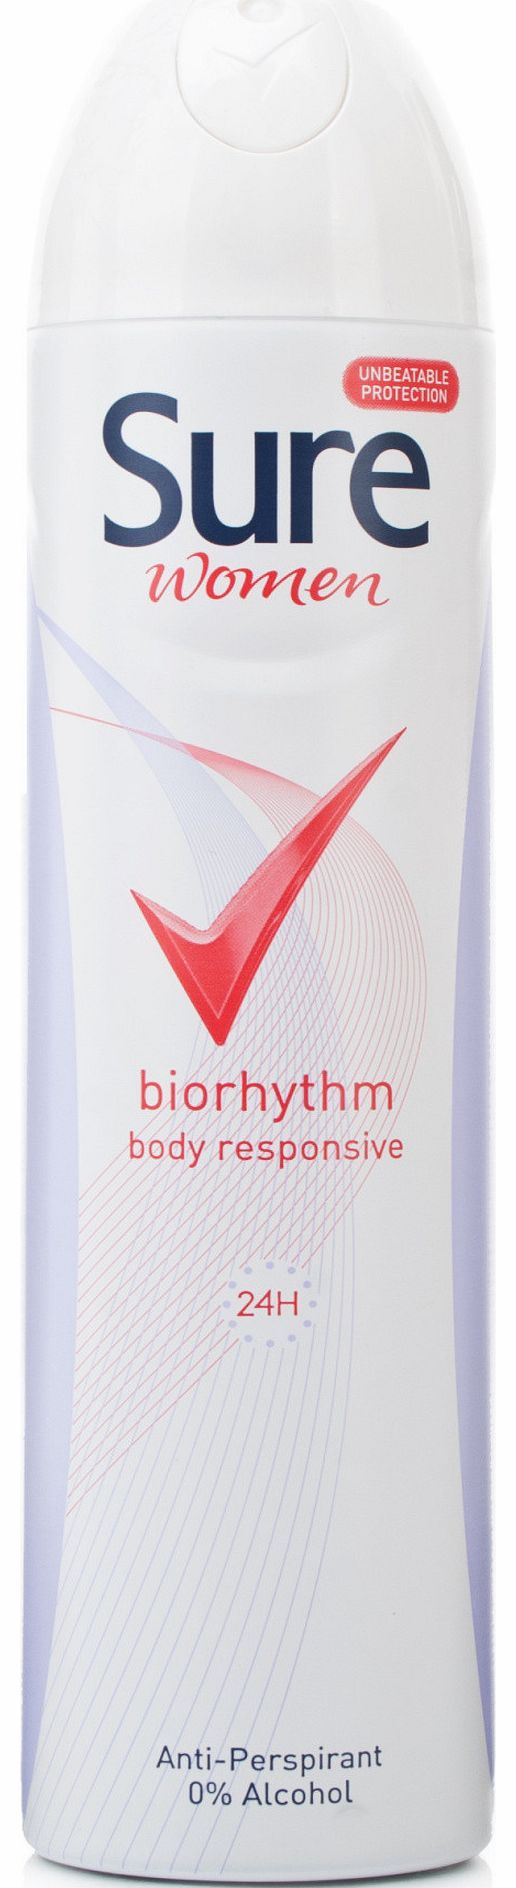 Women Biorhythm Dry 24h Active